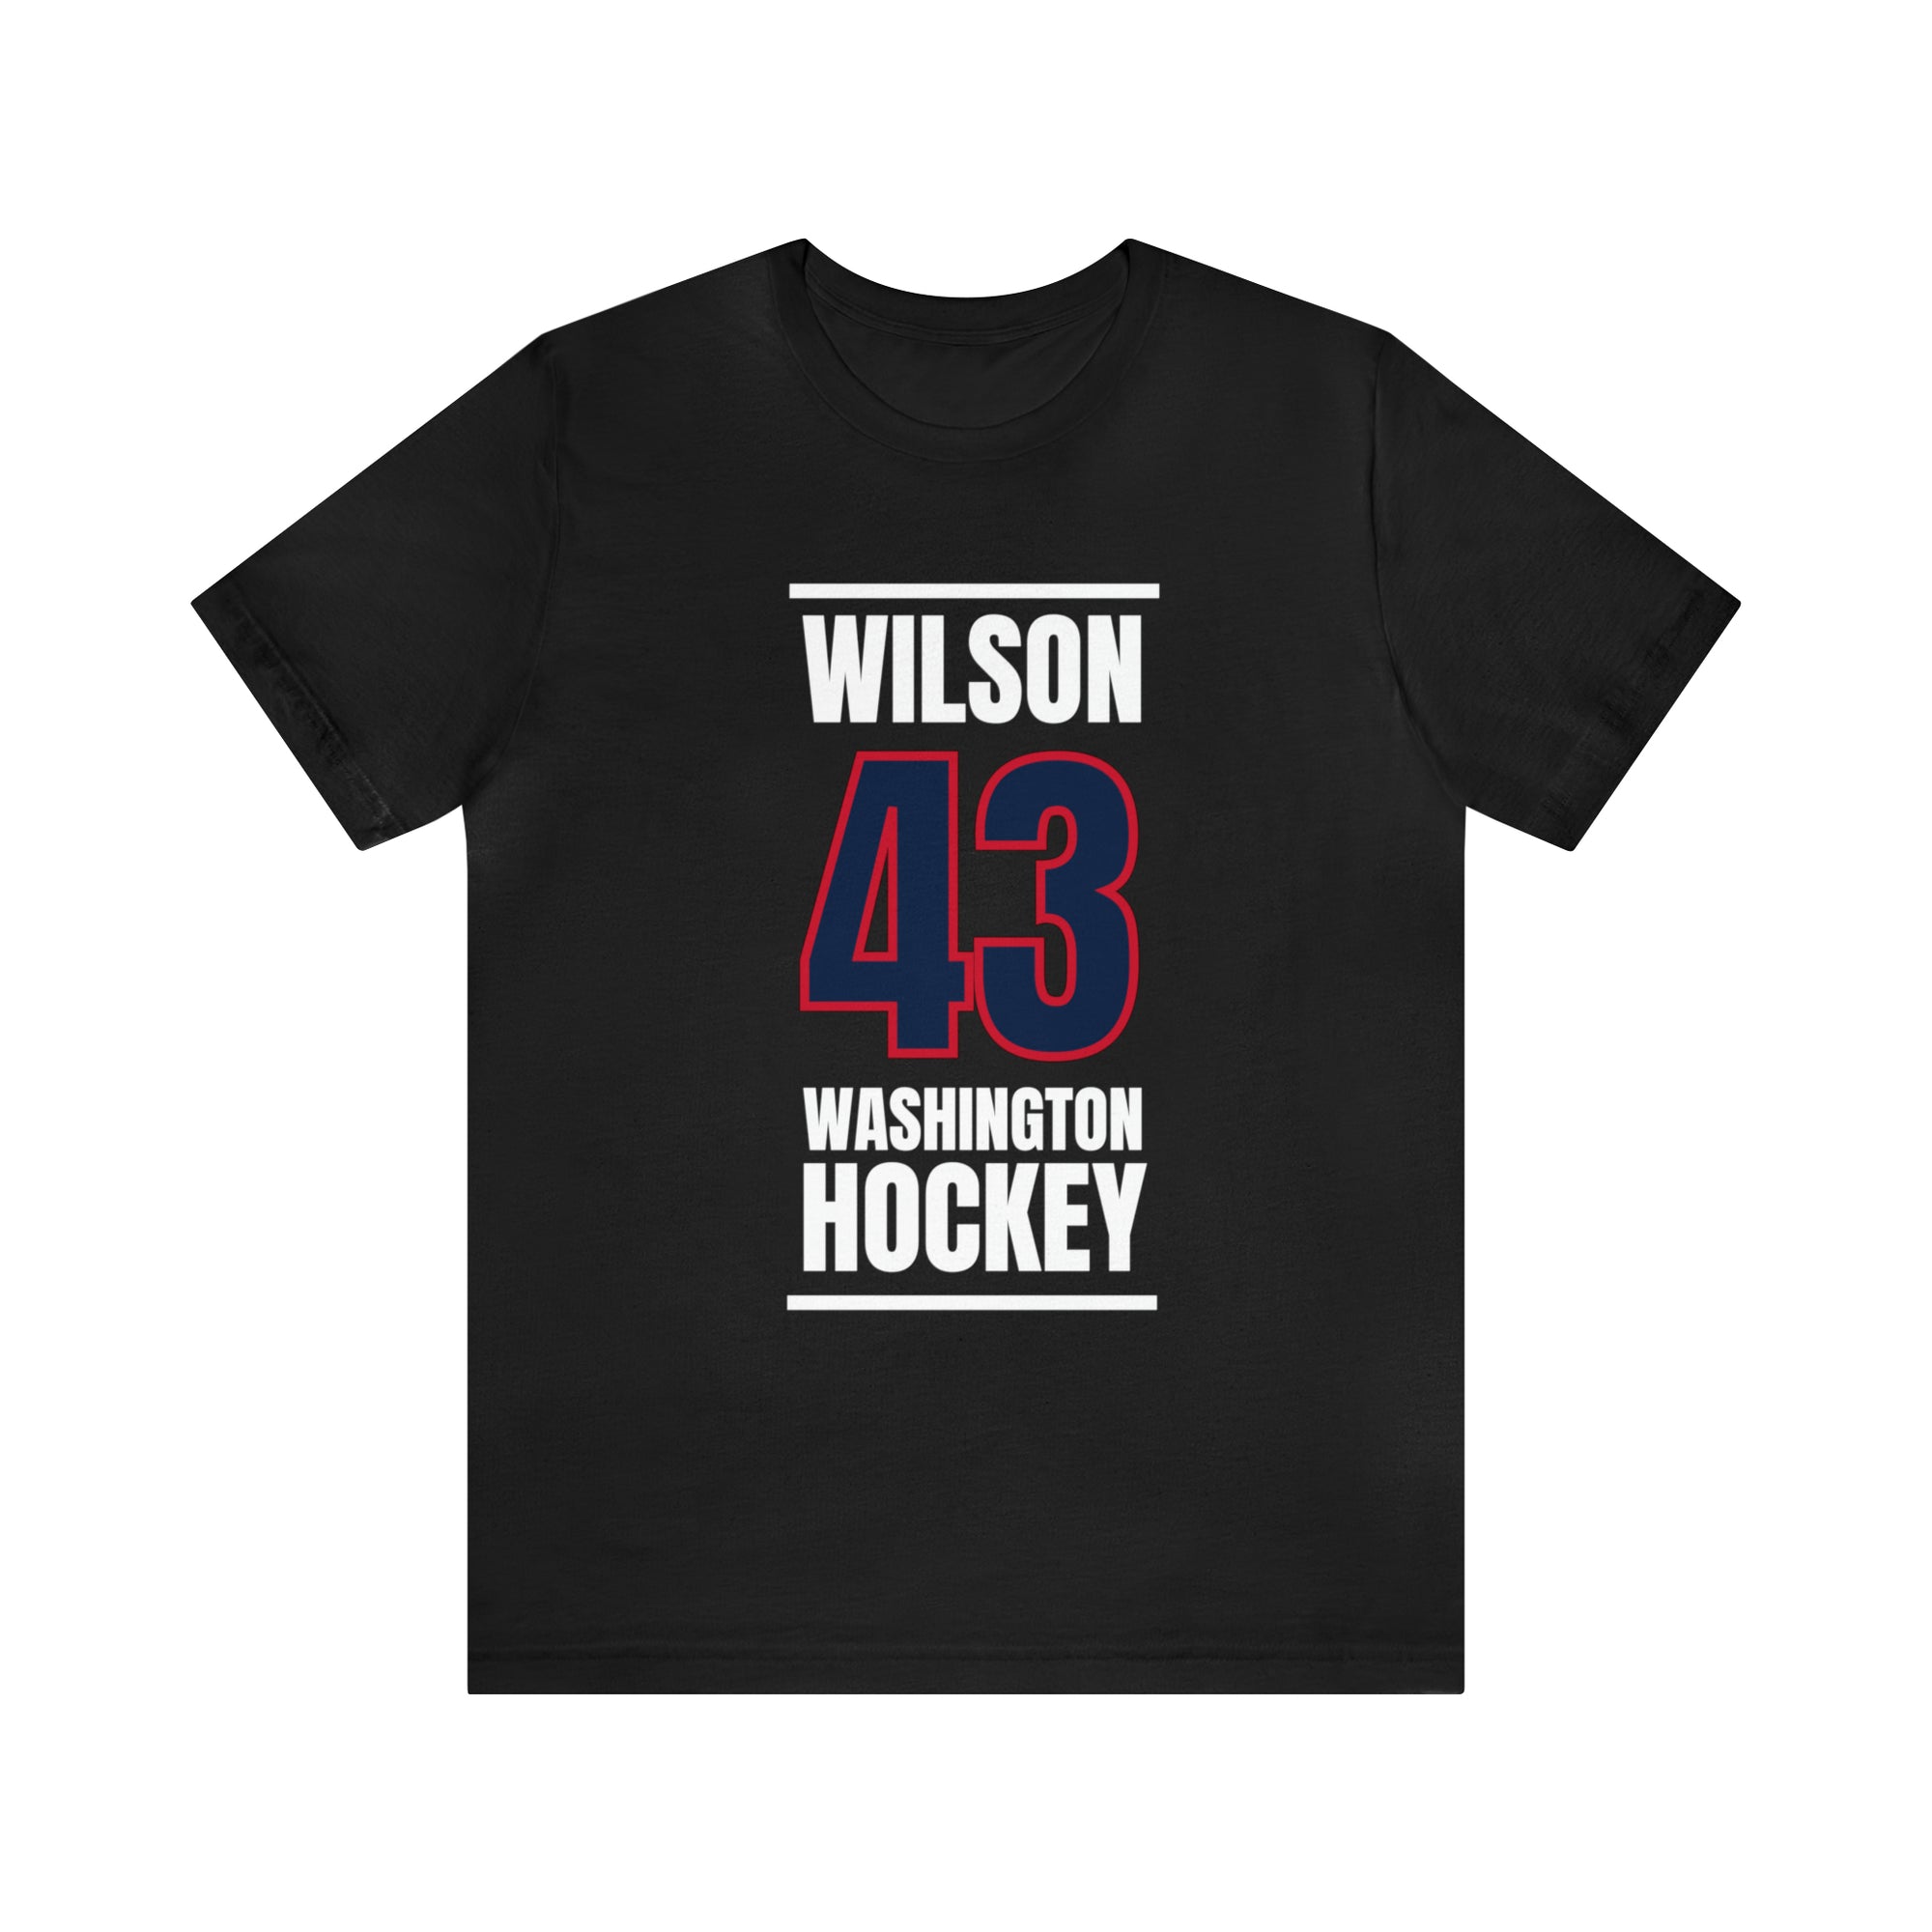 Wilson 43 Washington Hockey Navy Vertical Design Unisex T-Shirt